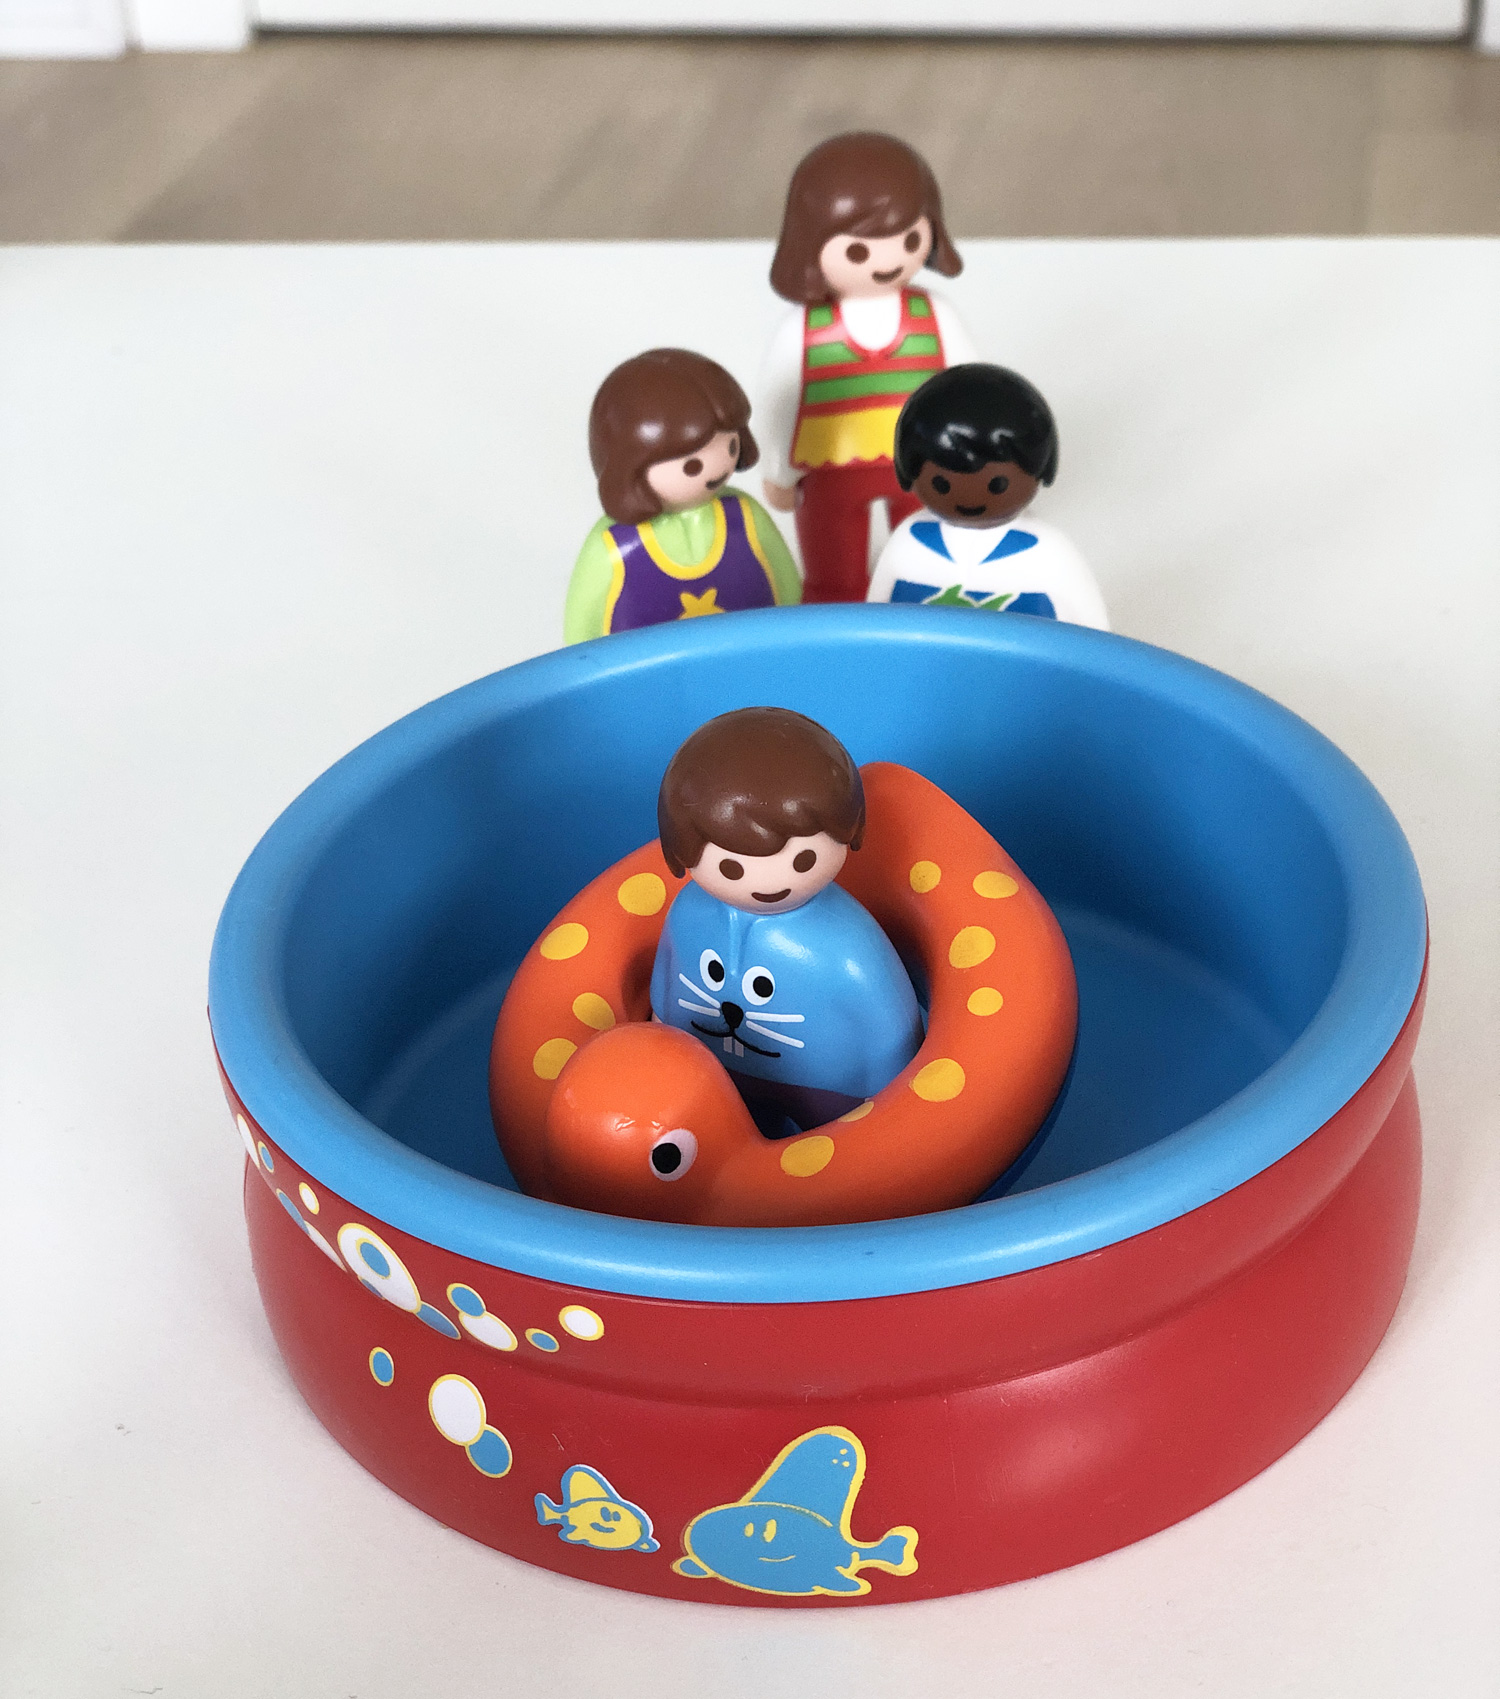 Playmobil chlldren in pool